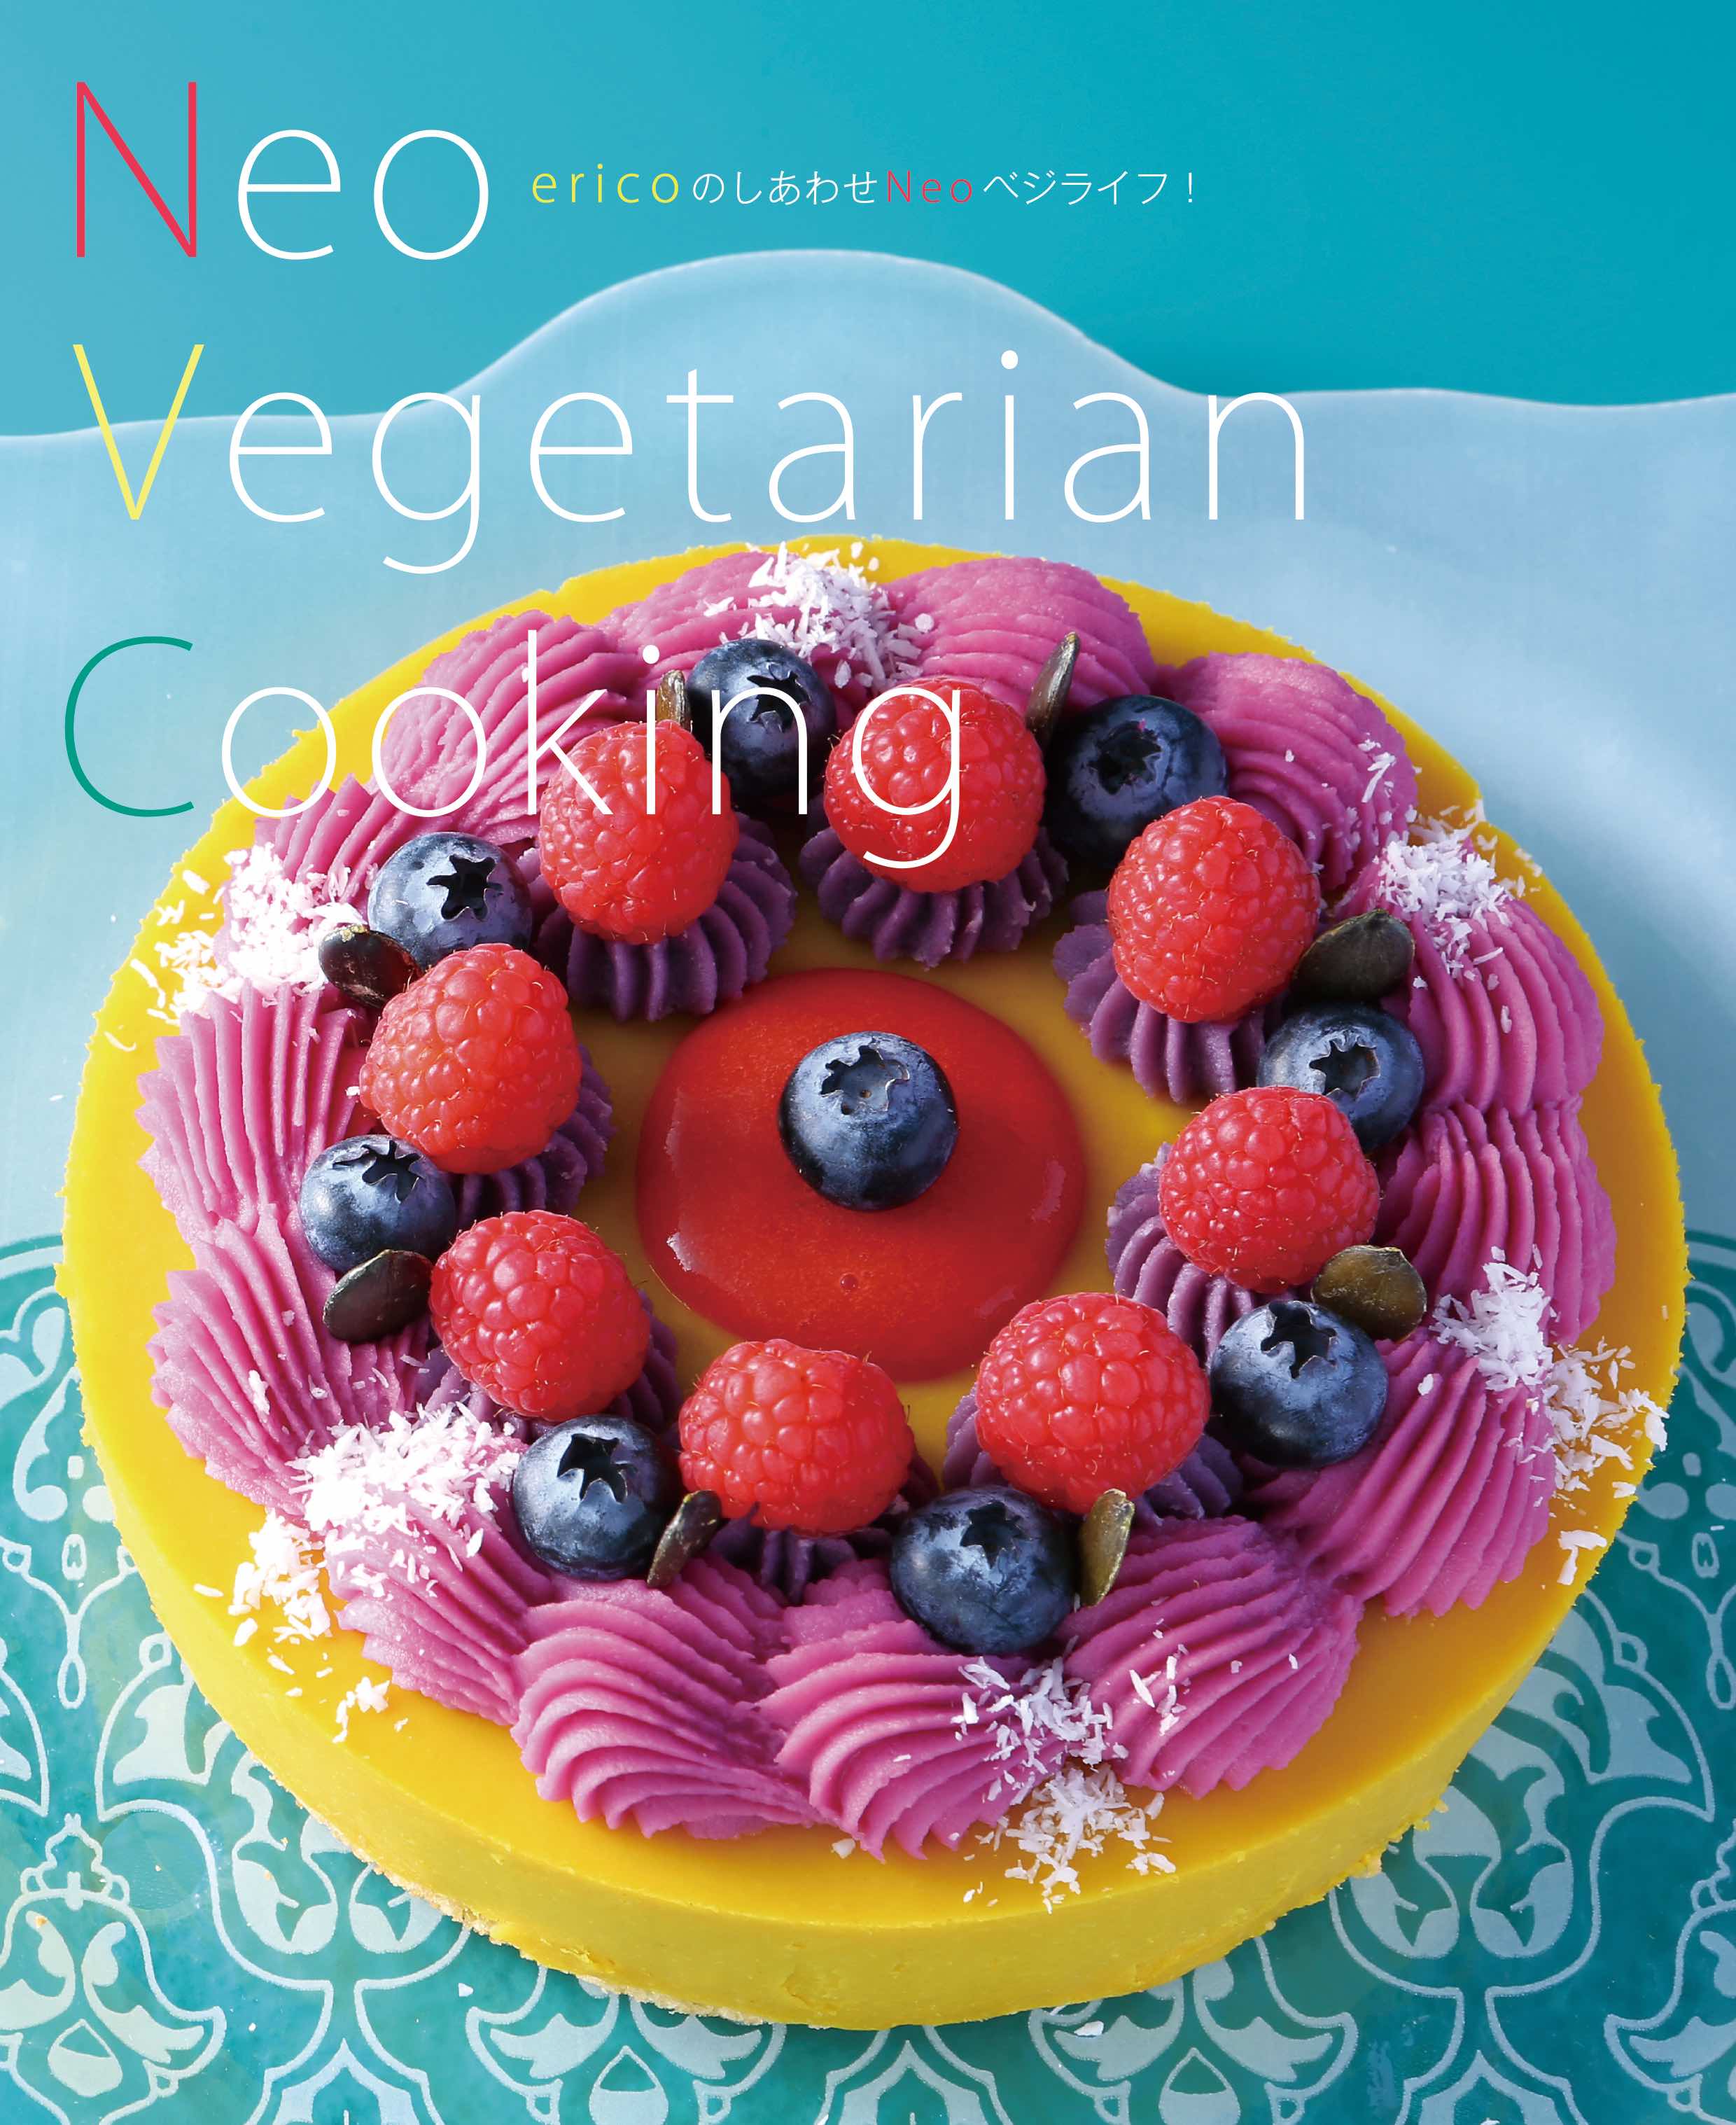 Neo Vegetarian Cooking